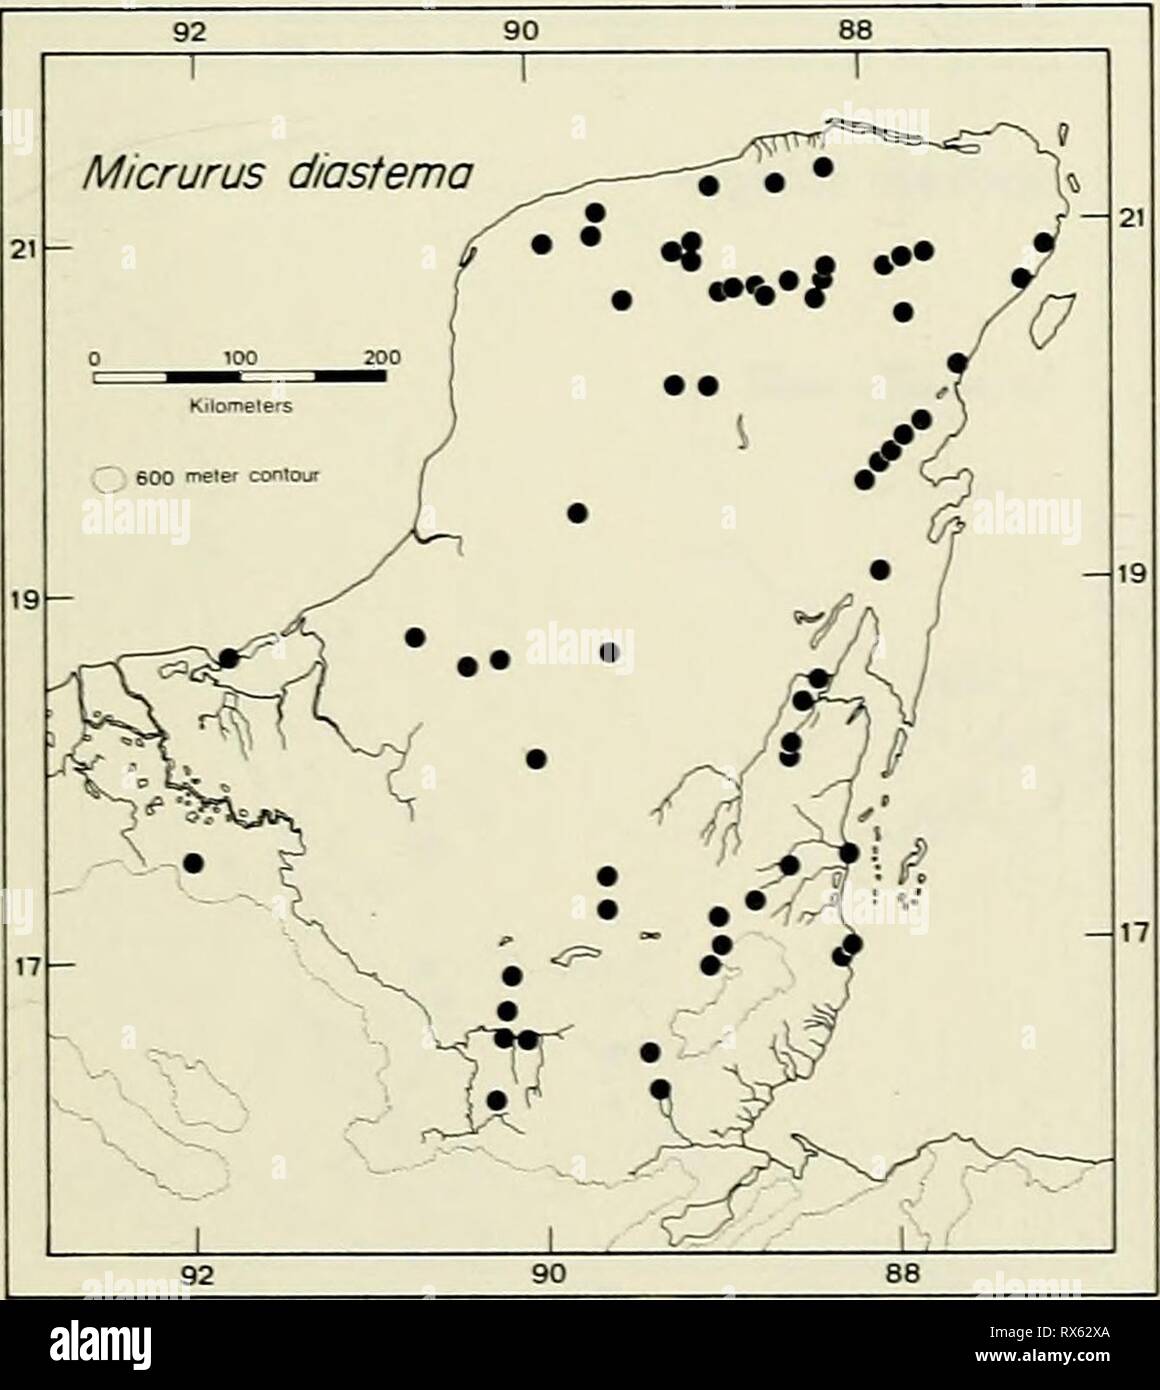 An ecogeographic analysis of the An ecogeographic analysis of the herpetofauna of the Yucatan Peninsula ecogeographicana00leej Year: 1980  92 90 B8 1 1 Tropidodipsas sort orii ^ 1 ^i /''â¢ â¢ t-2, 21 r / * â¢ â¬â¢â¢ f â¢ '^ ^(7 Â° ,,^Â°Â° ^jj' â¢ . ,...,â/ â¢ C-0 - 19 19 i5r^l ^J^ v'Vyos. 1 â ( /2  1^' &lt;-^ ^^u  L â¢ â¢ Y/A â ^' N, ' -CP' 1 1 ' - 1 .^  92 90 88 Stock Photo